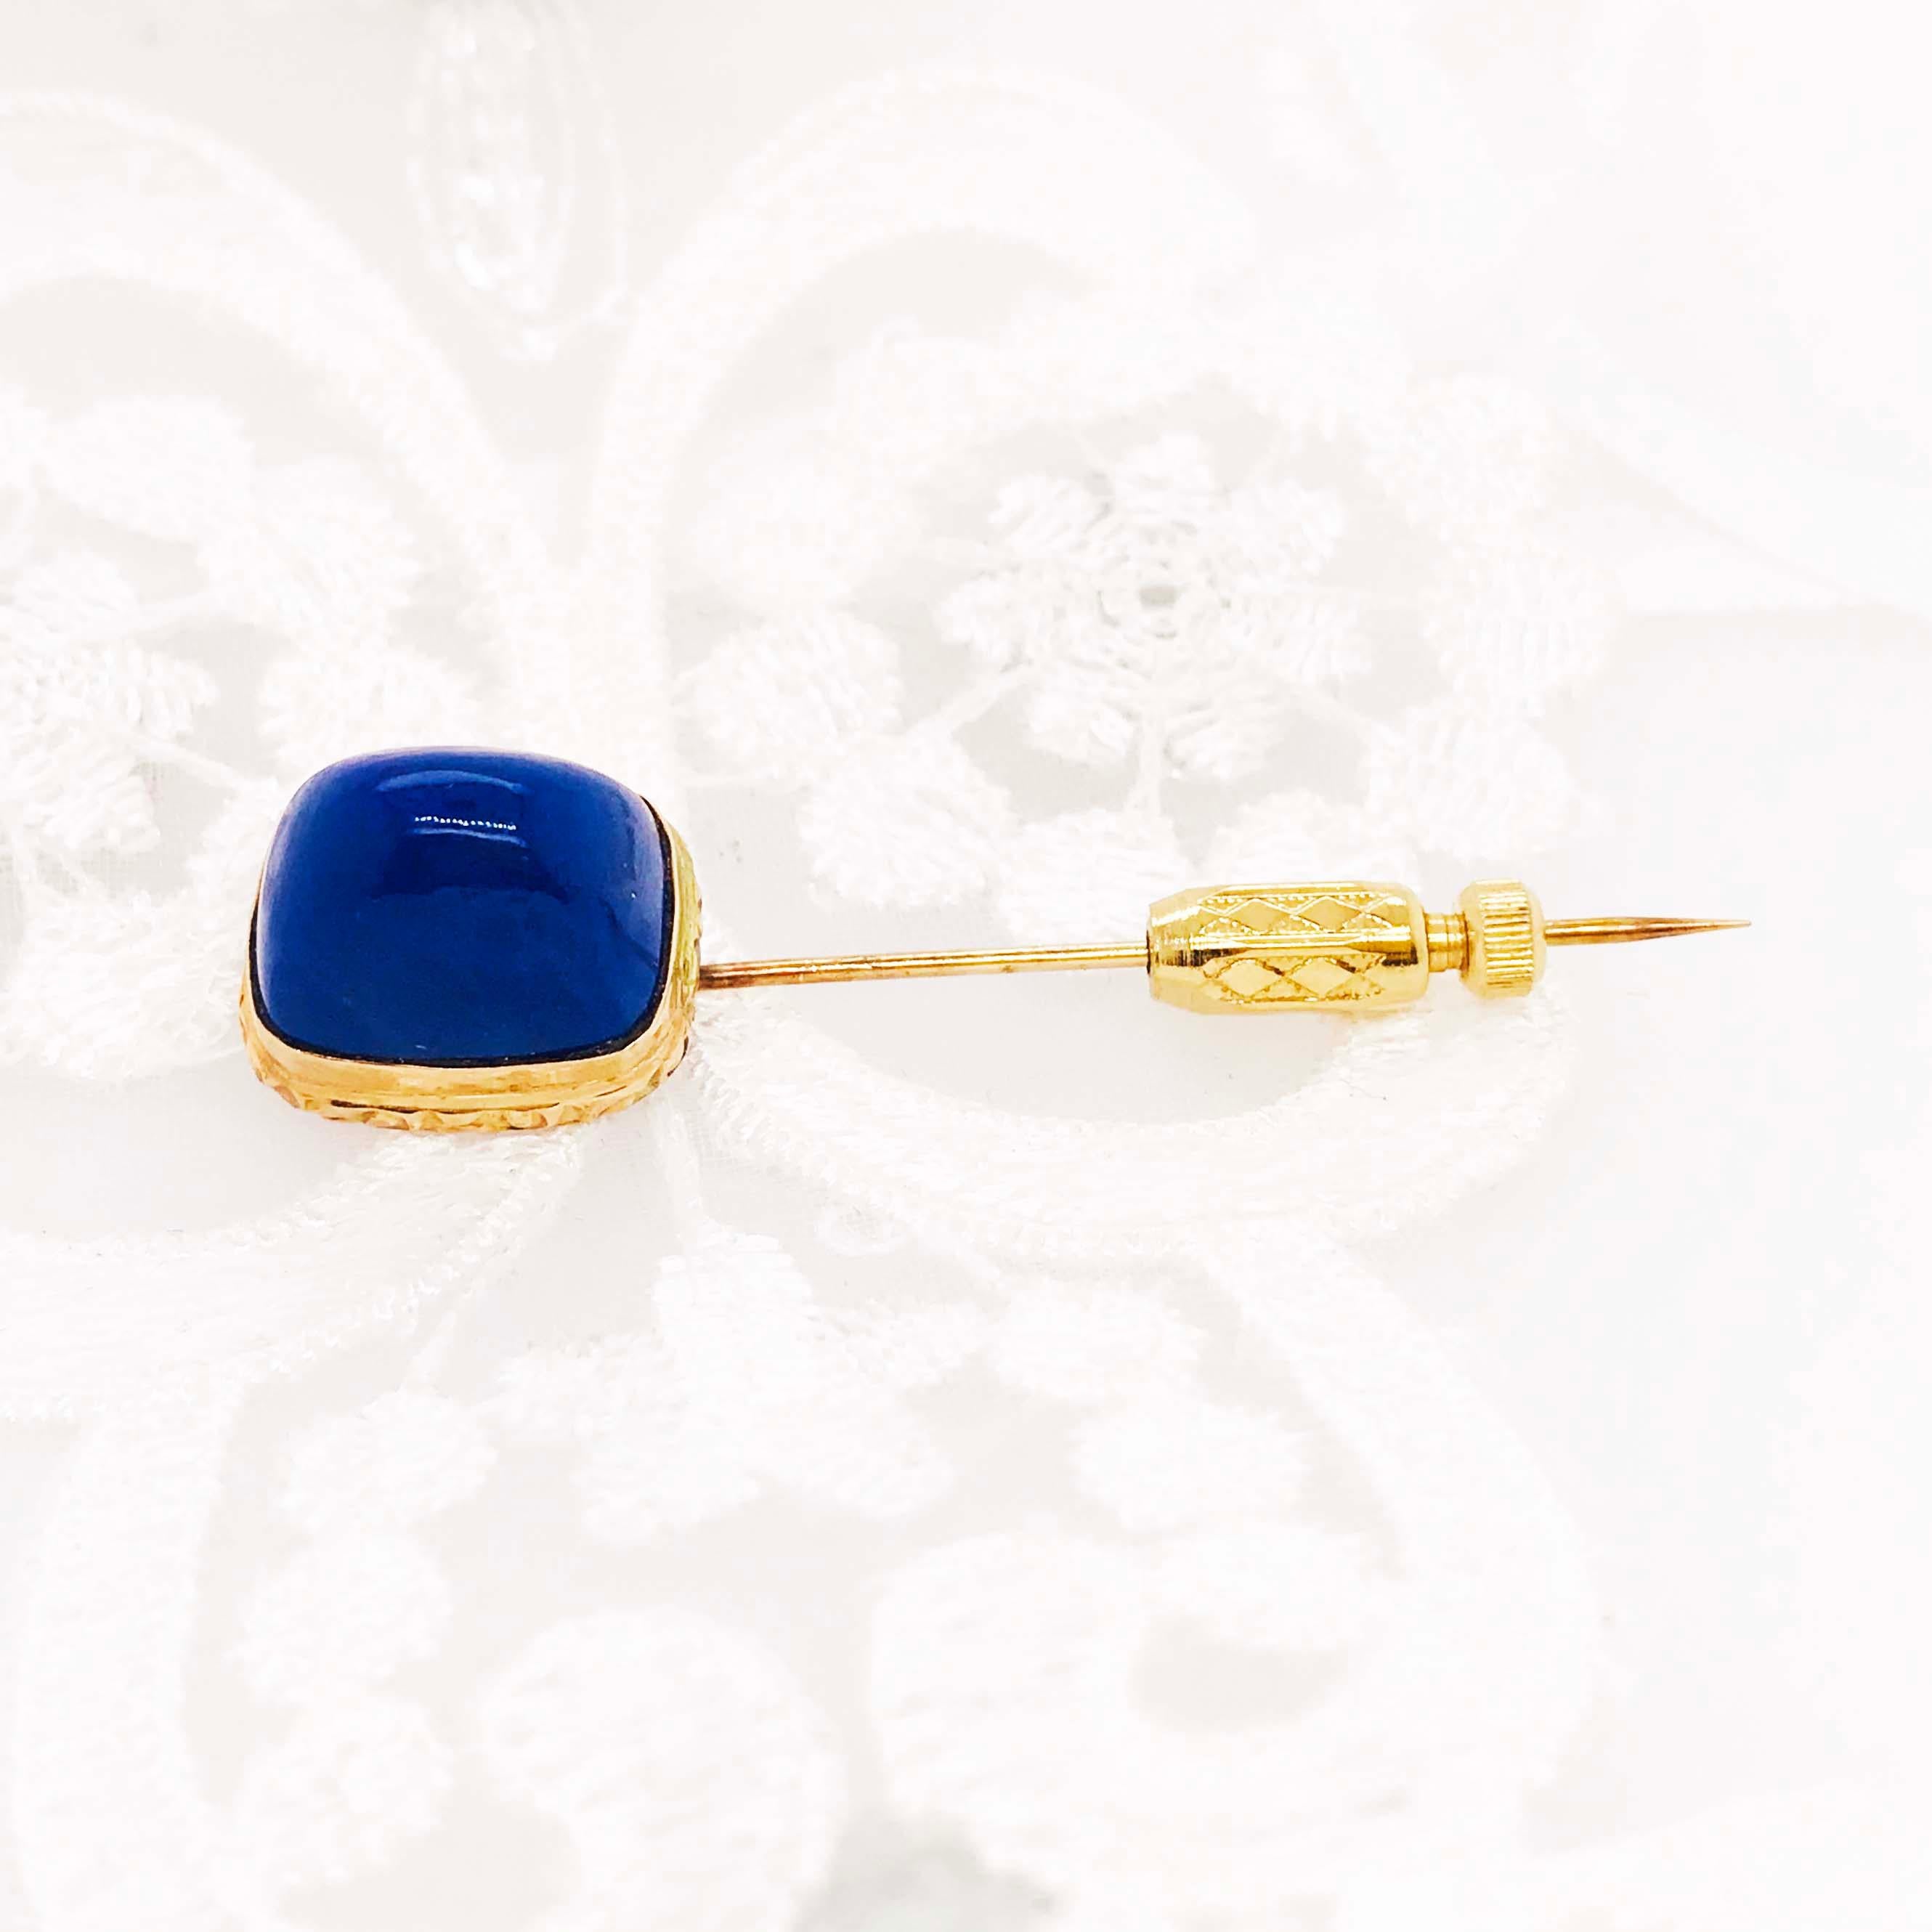 Artisan Blue Lapis Brooch, Gemstone Cabochon Handmade Brooch/Pin in 18 Karat Yellow Gold